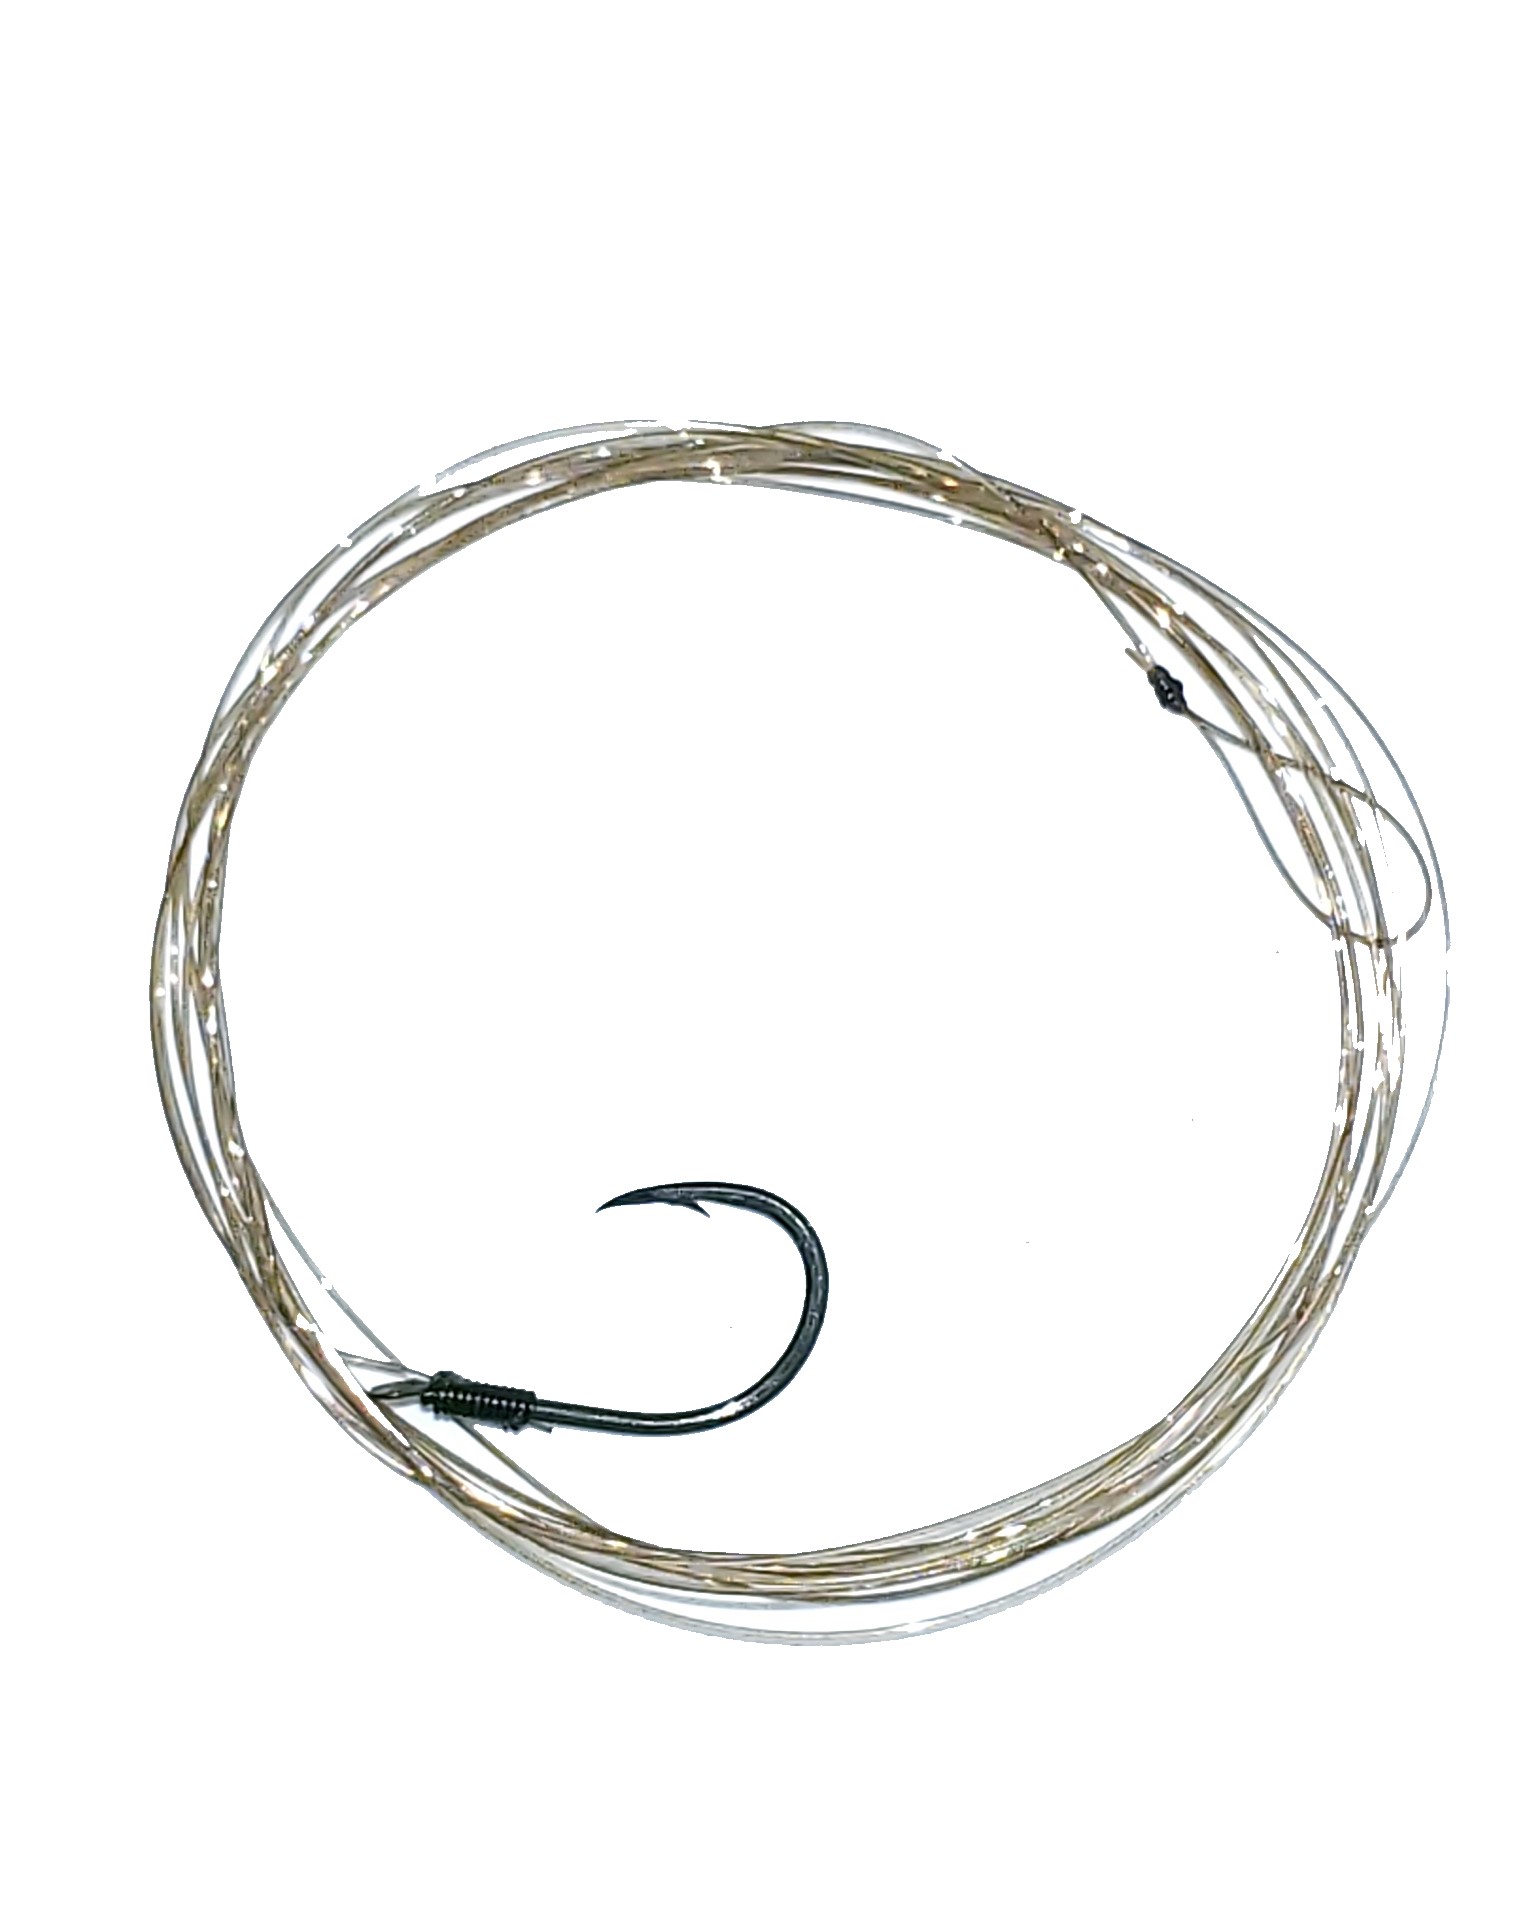 Snelled Hooks (Single 48) [152] : Caribou Lures Inc., Canadian, snelled  circle hooks